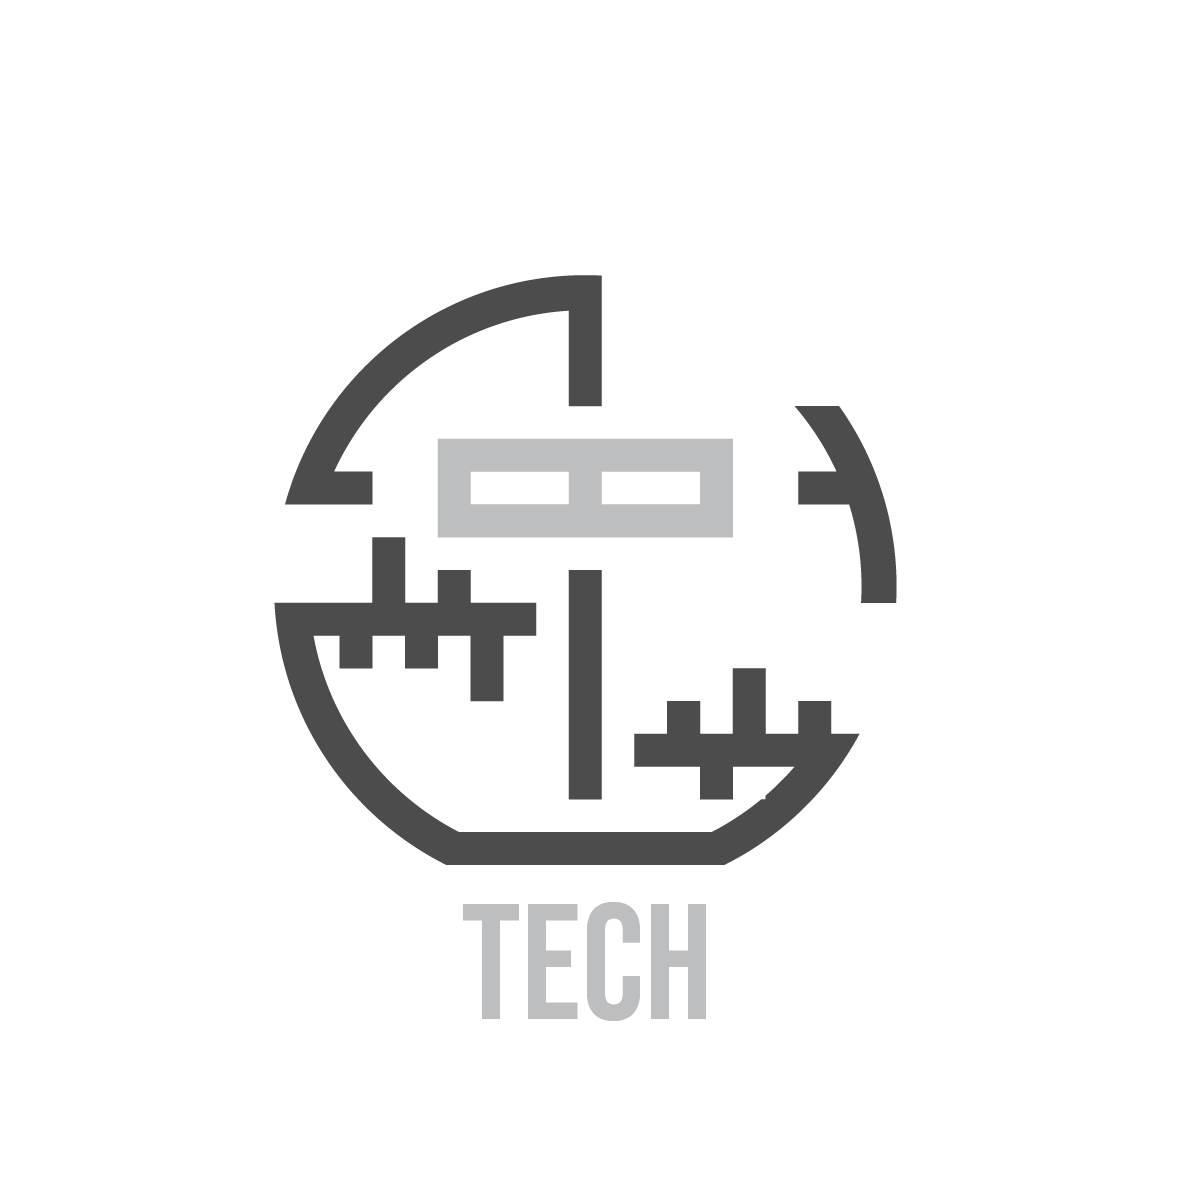 Gray & Light Gray Tech Logo cover image.